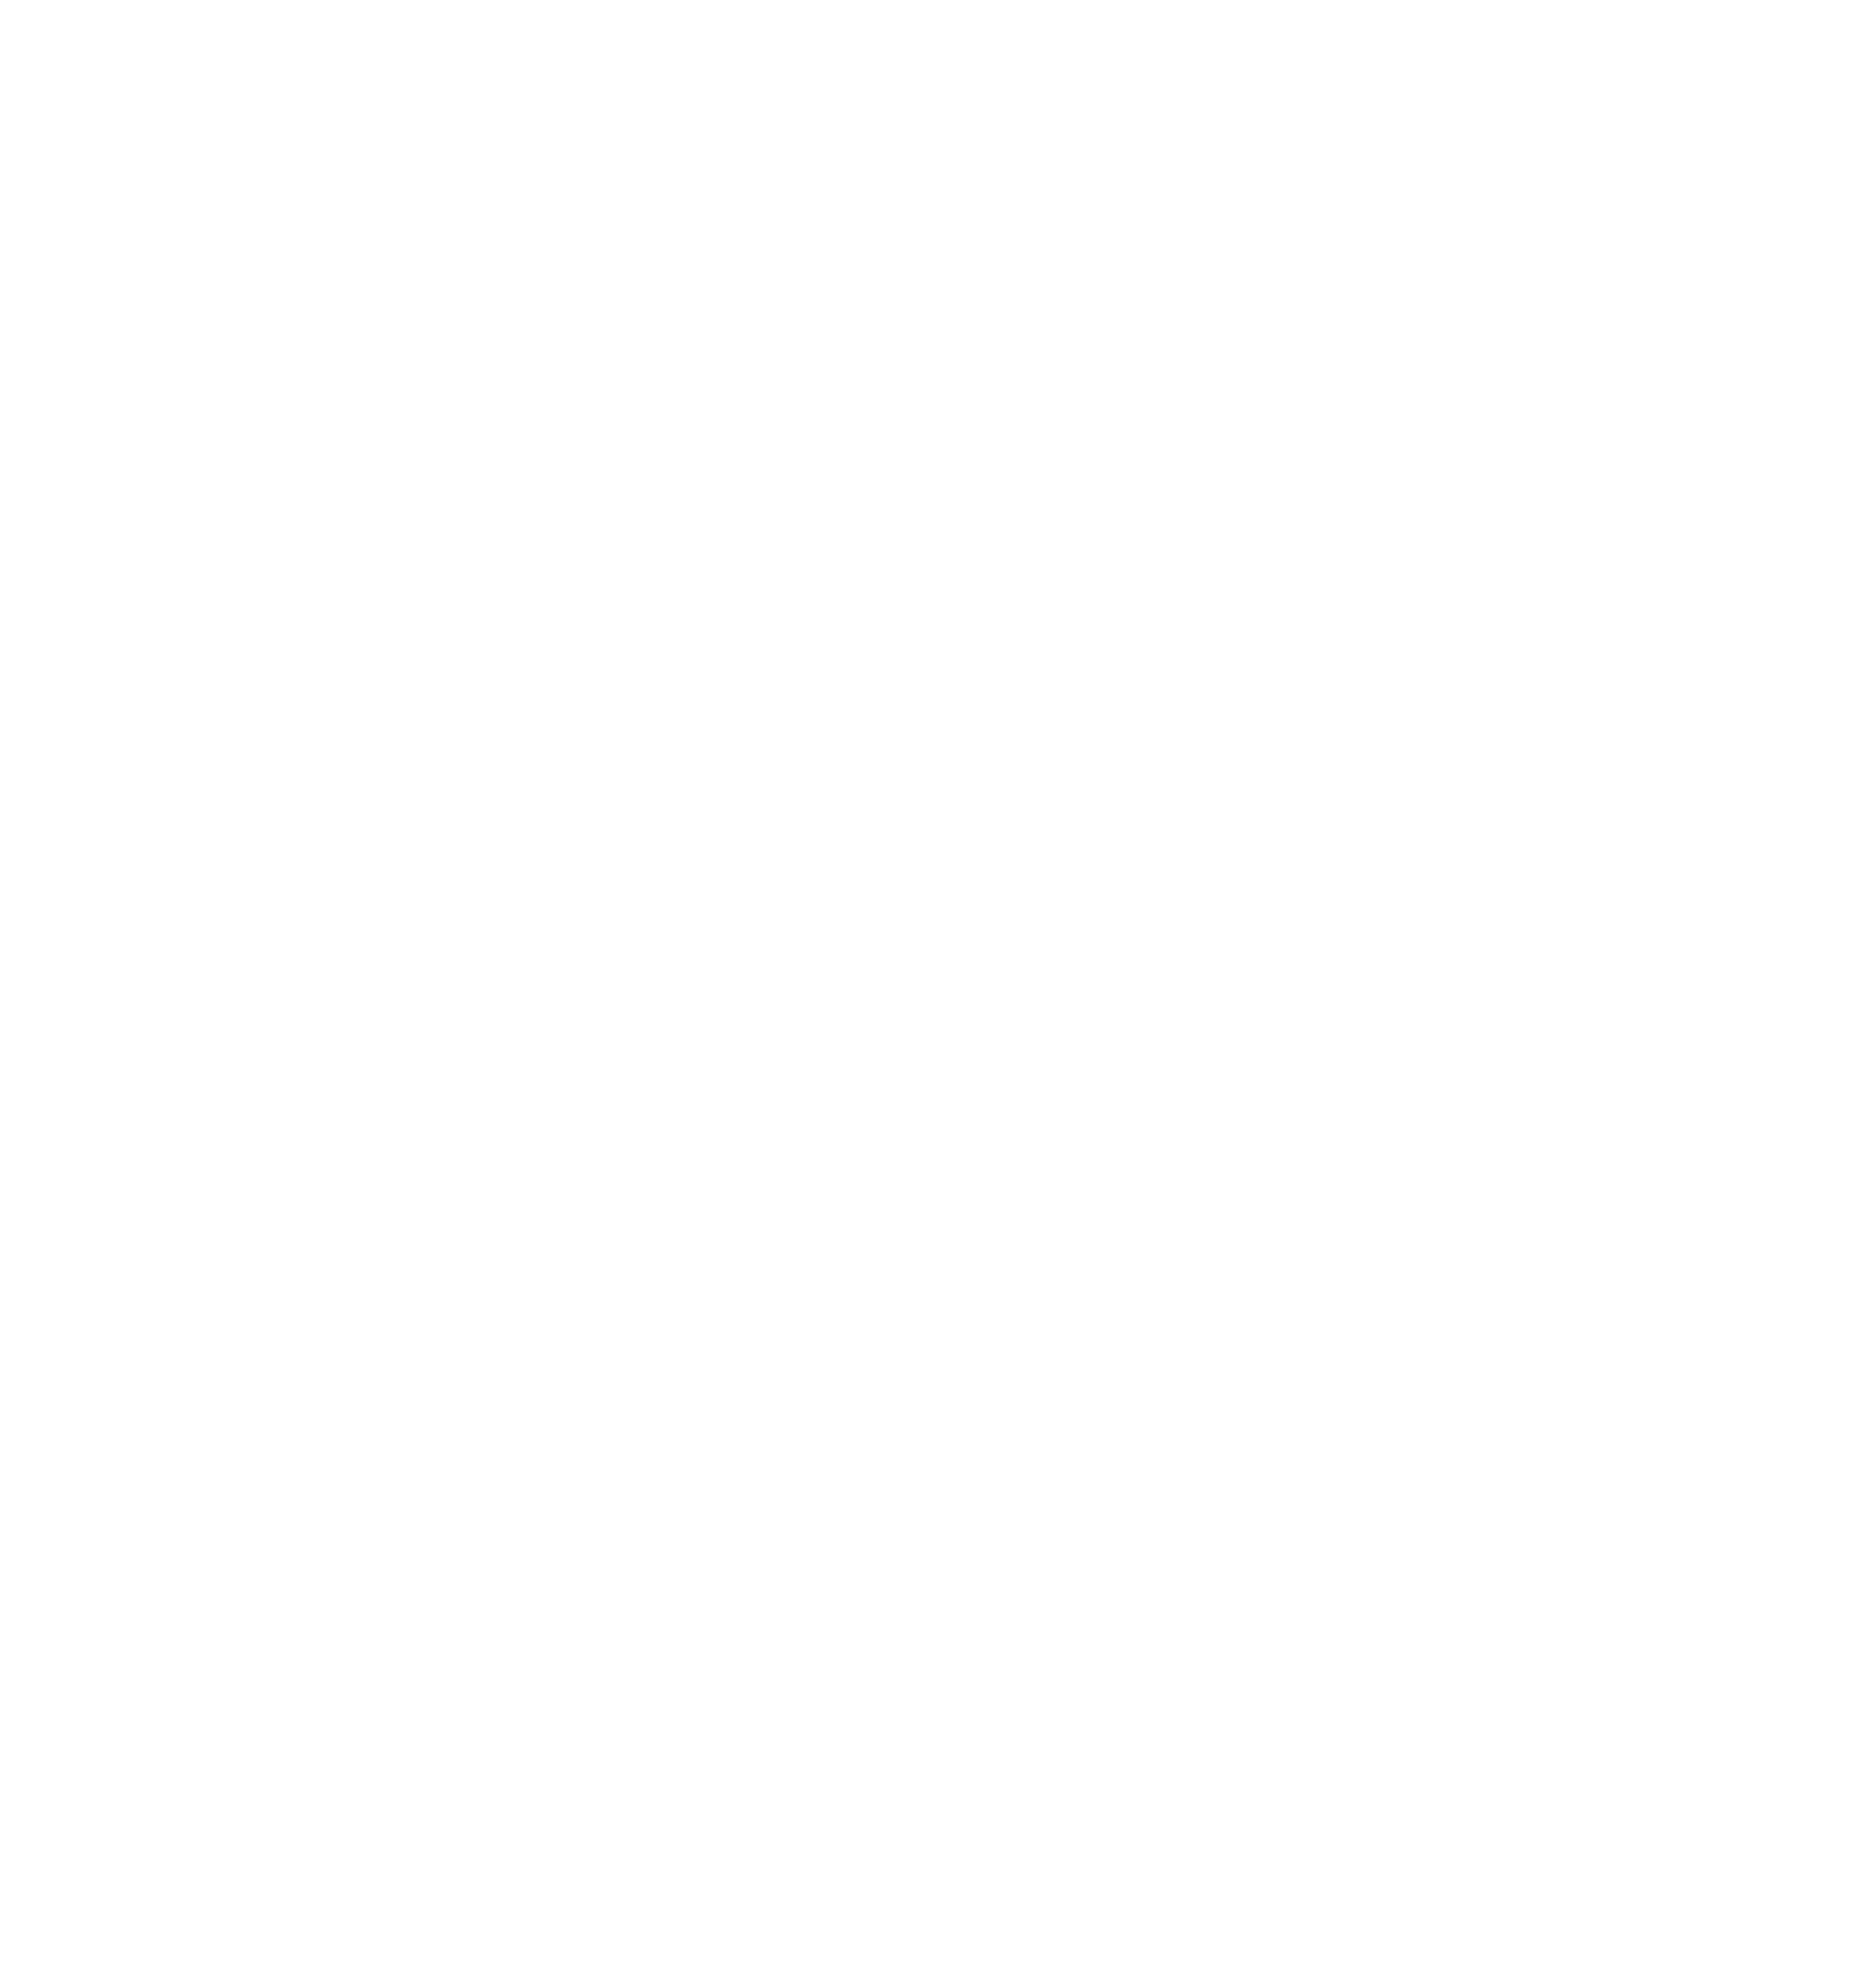 Welcome to NAGATORO! enjoy your camp